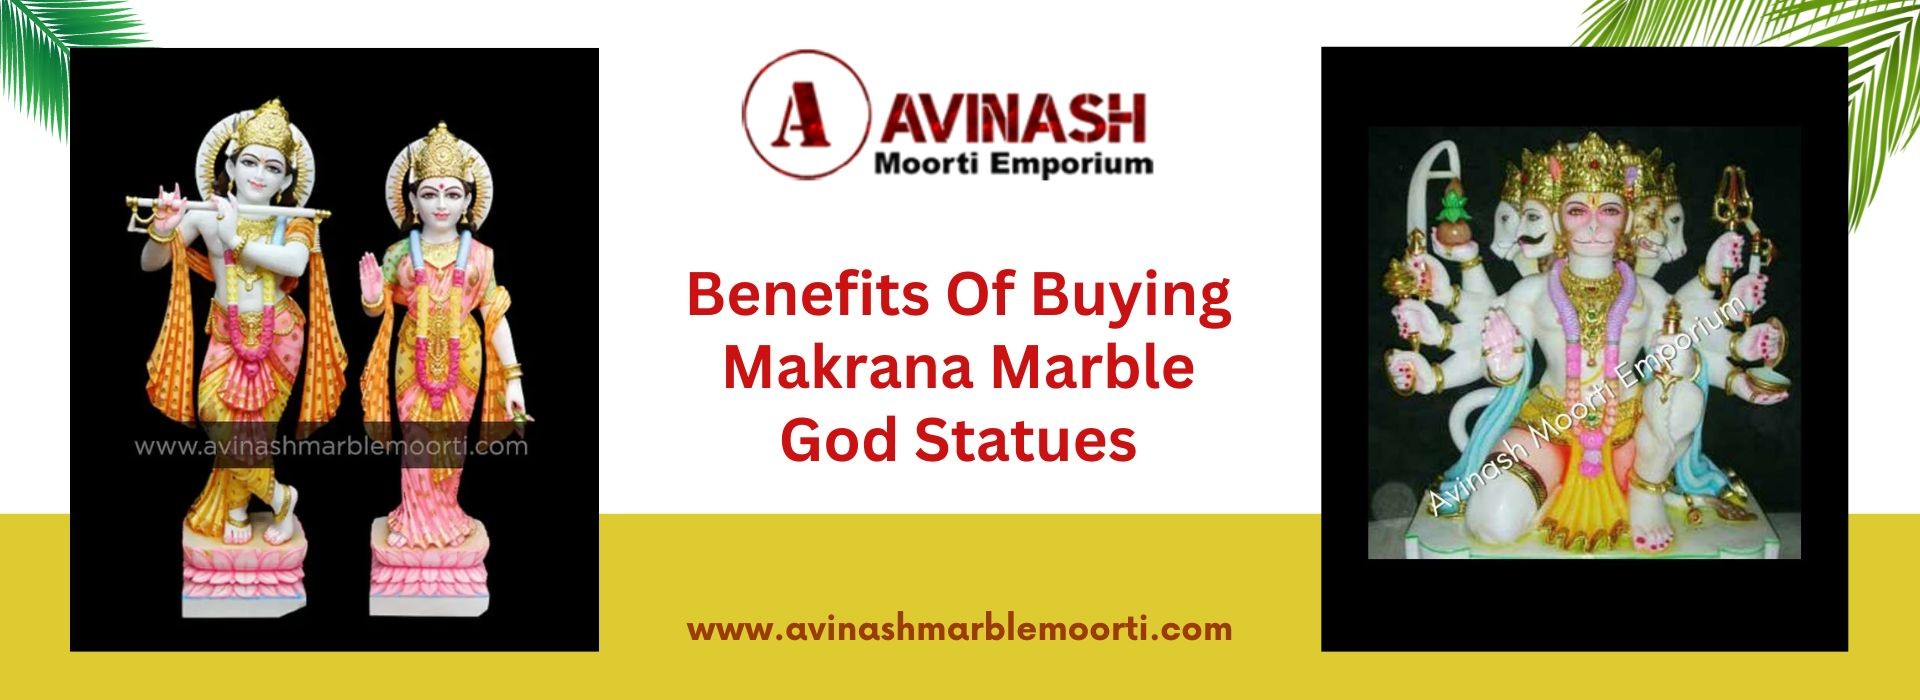 Benefits Of Buying Makrana Marble God Statues